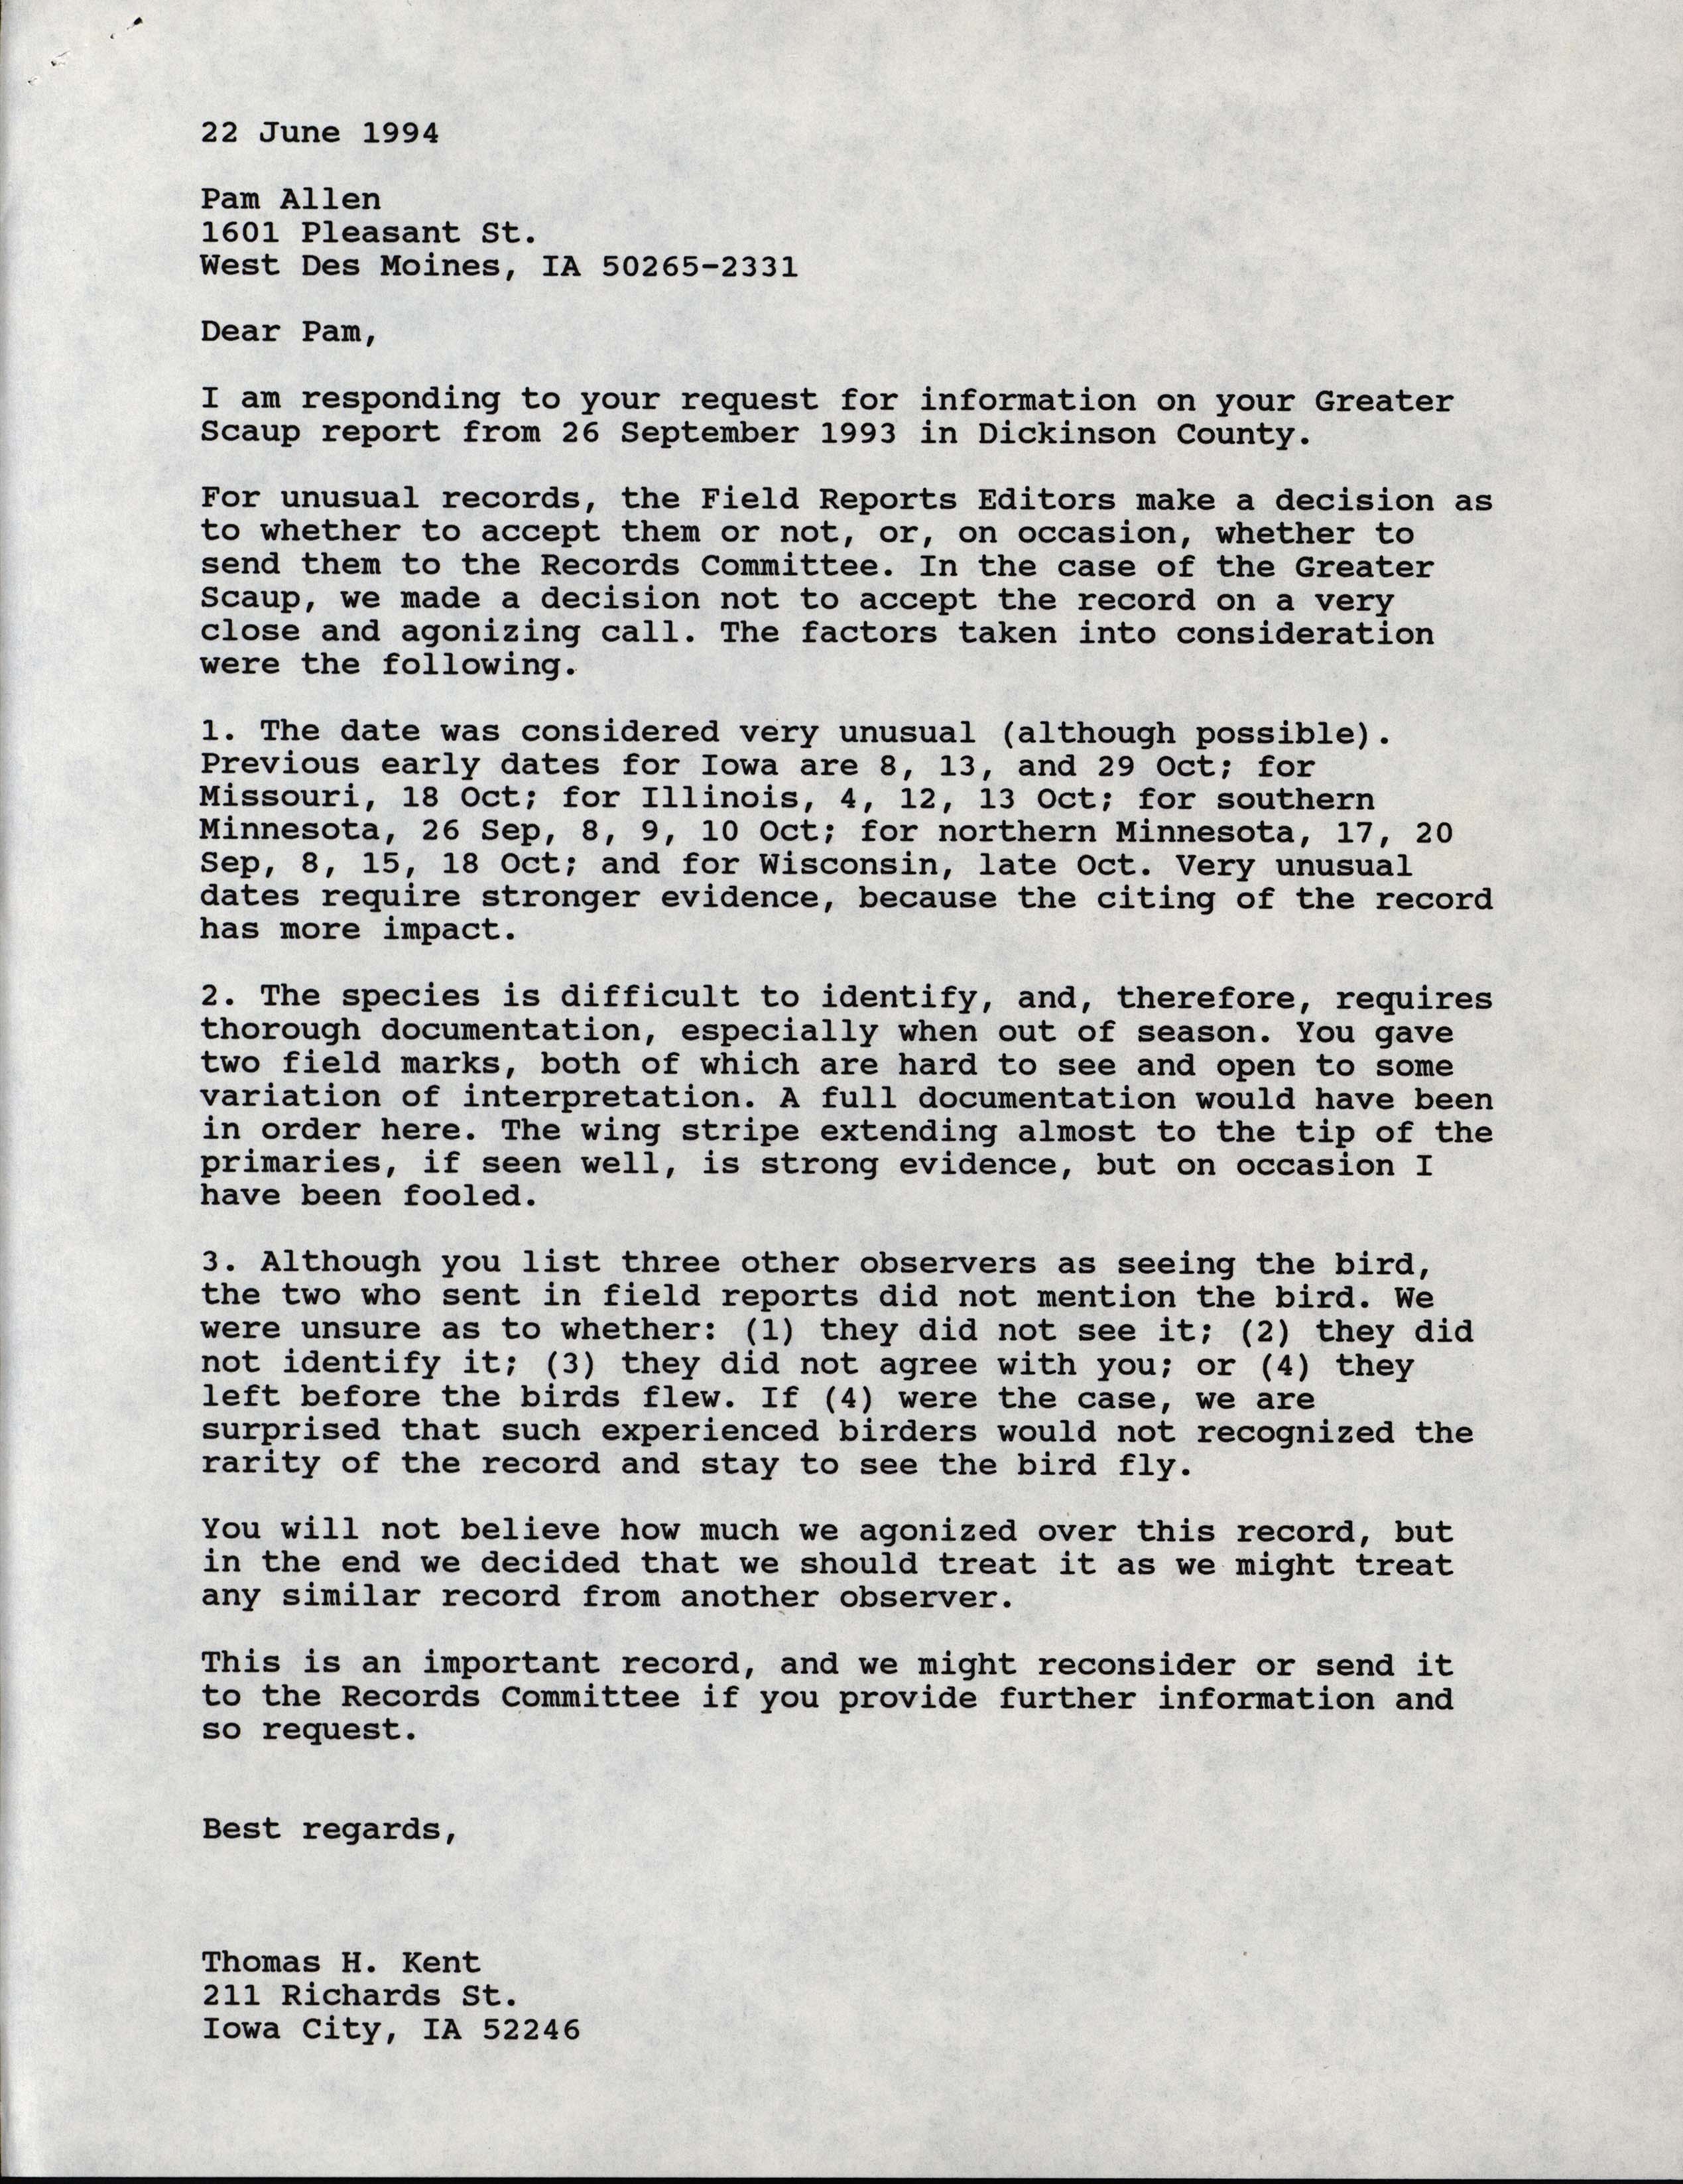 Thomas Kent letter to Pam Allen regarding Greater Scaup sighting, June 22, 1994